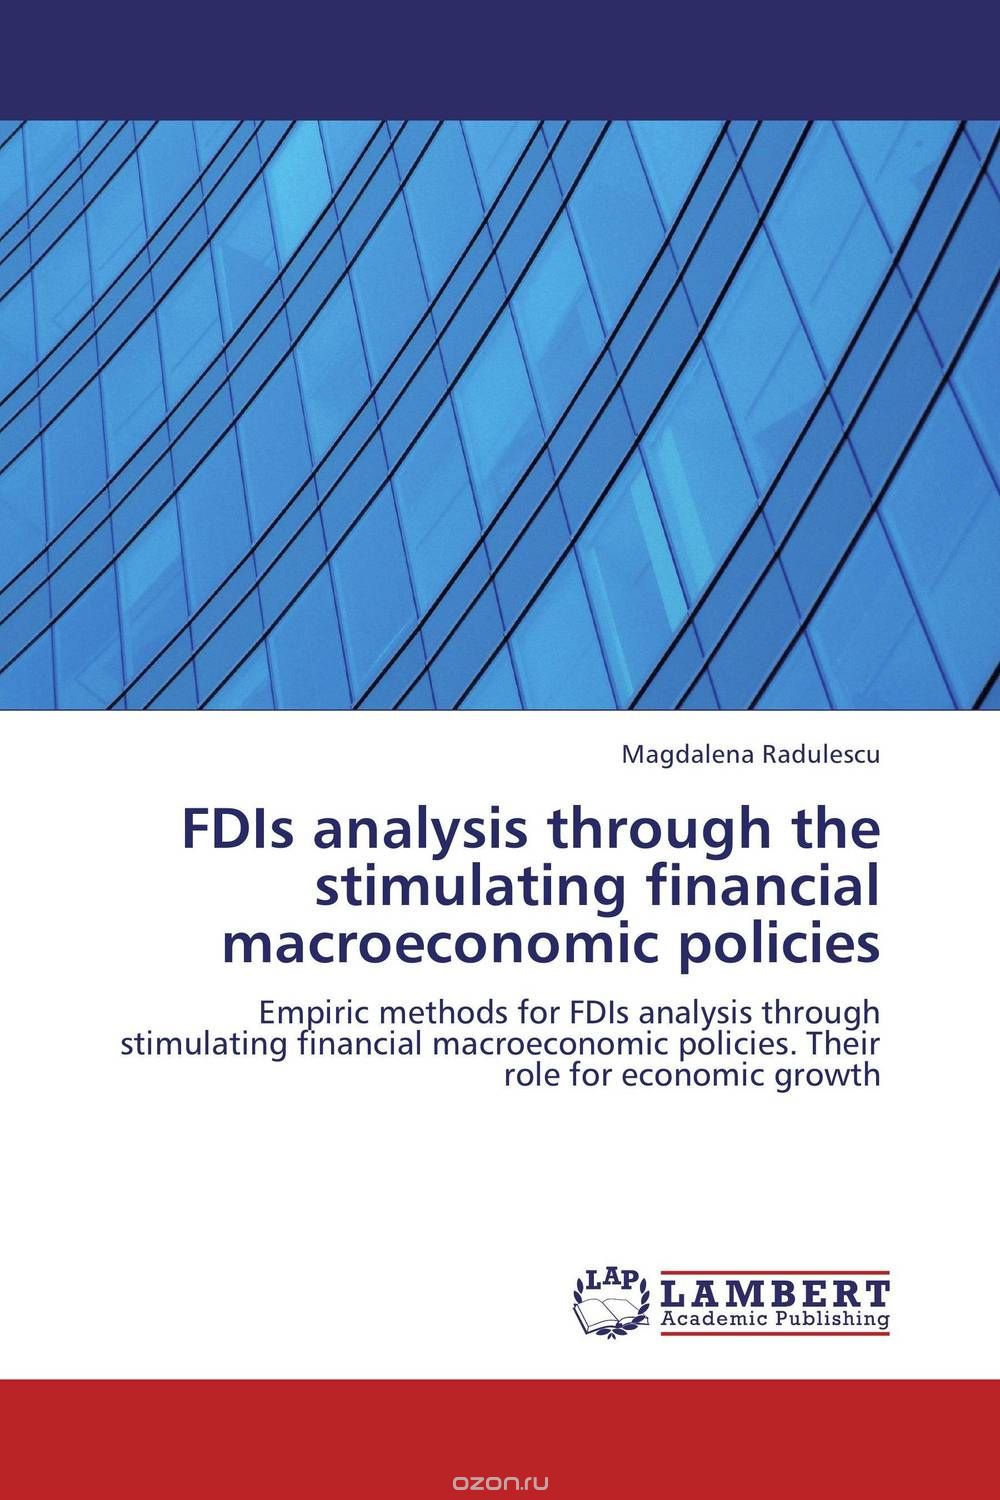 Скачать книгу "FDIs analysis through the stimulating financial macroeconomic policies"